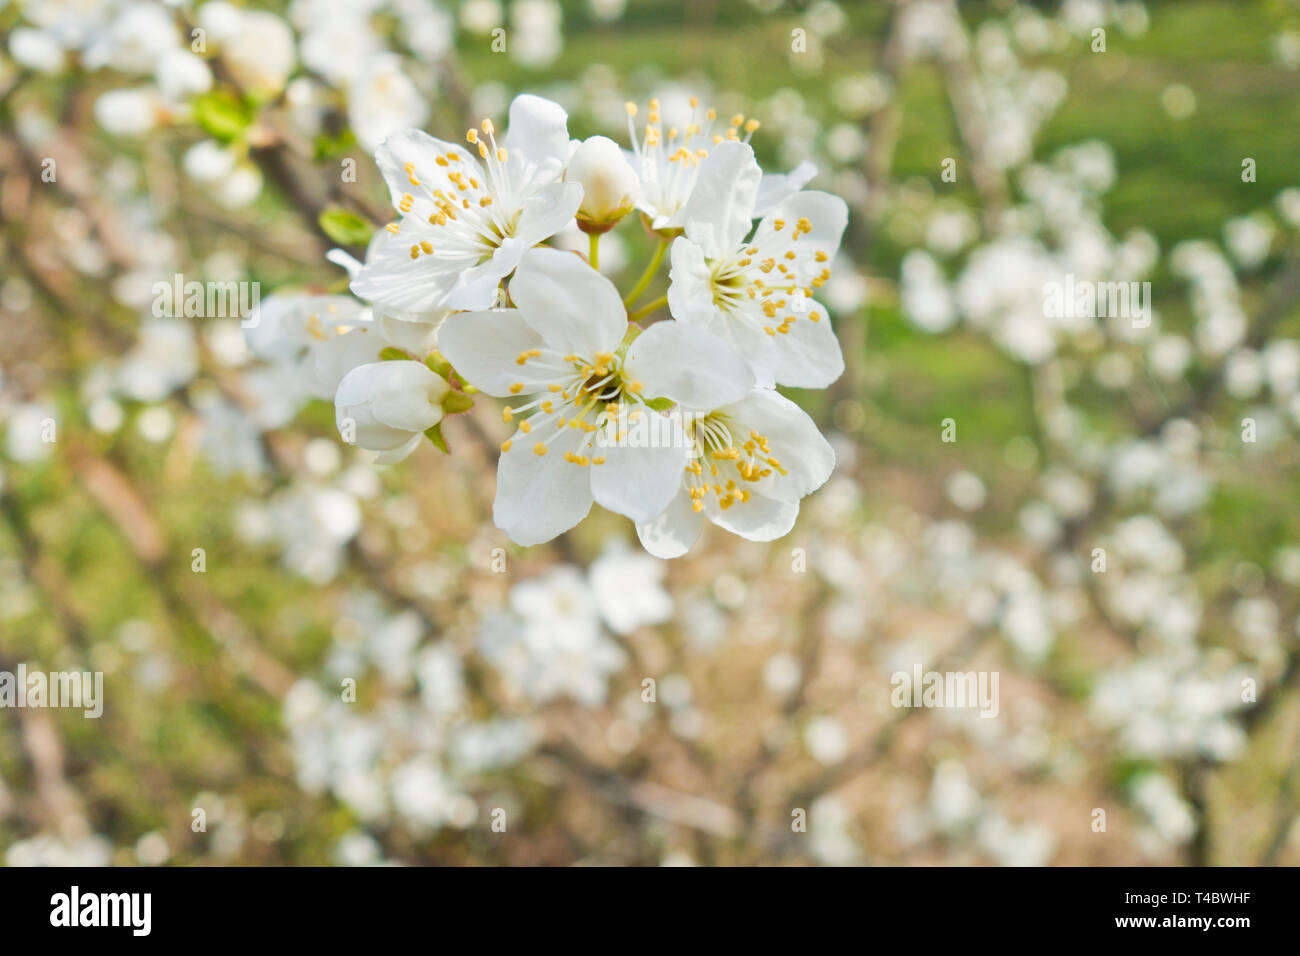 white apple tree flowers blossom Stock Photo